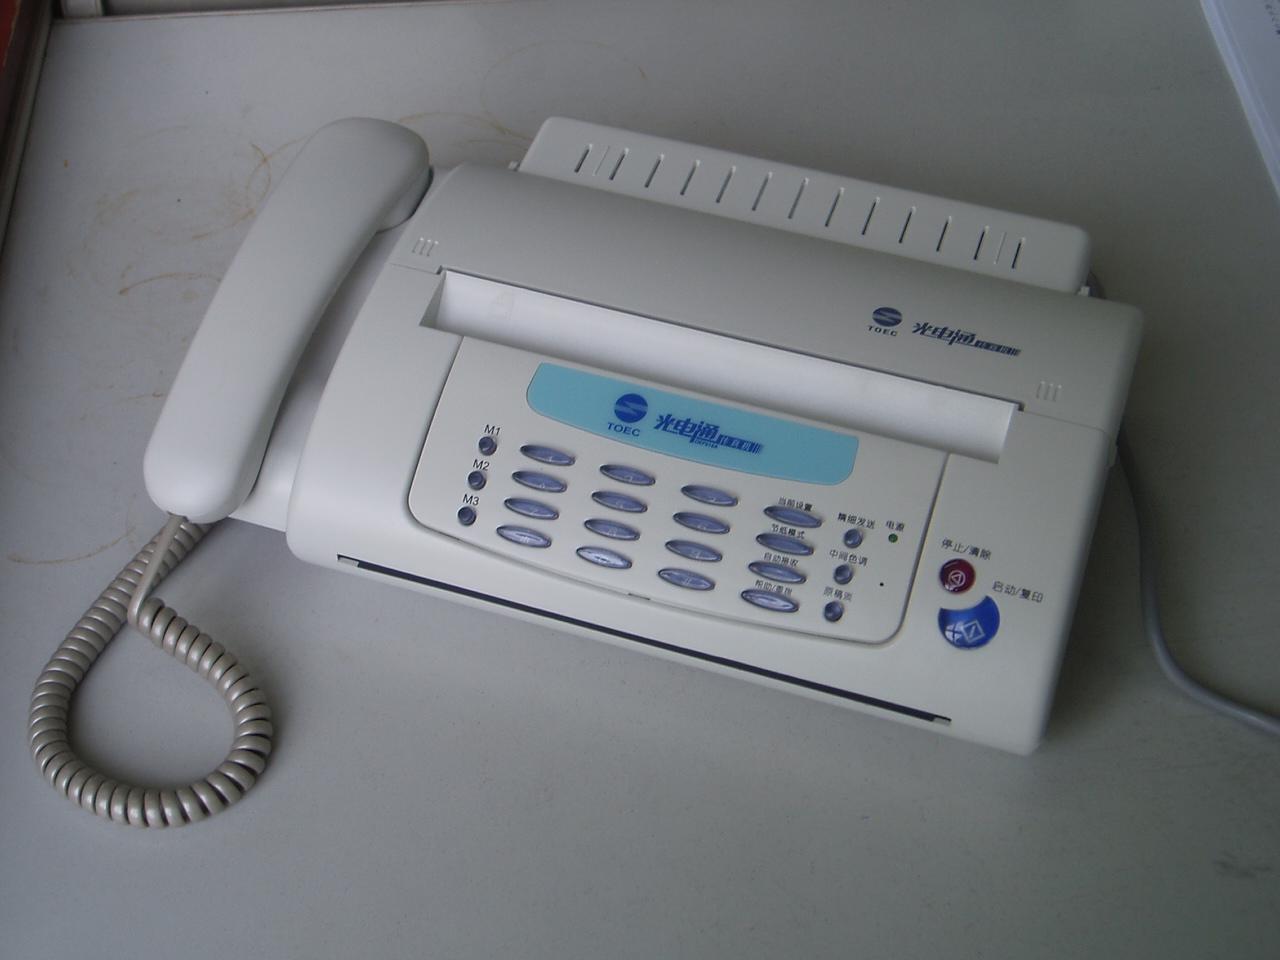 Basic fax machine